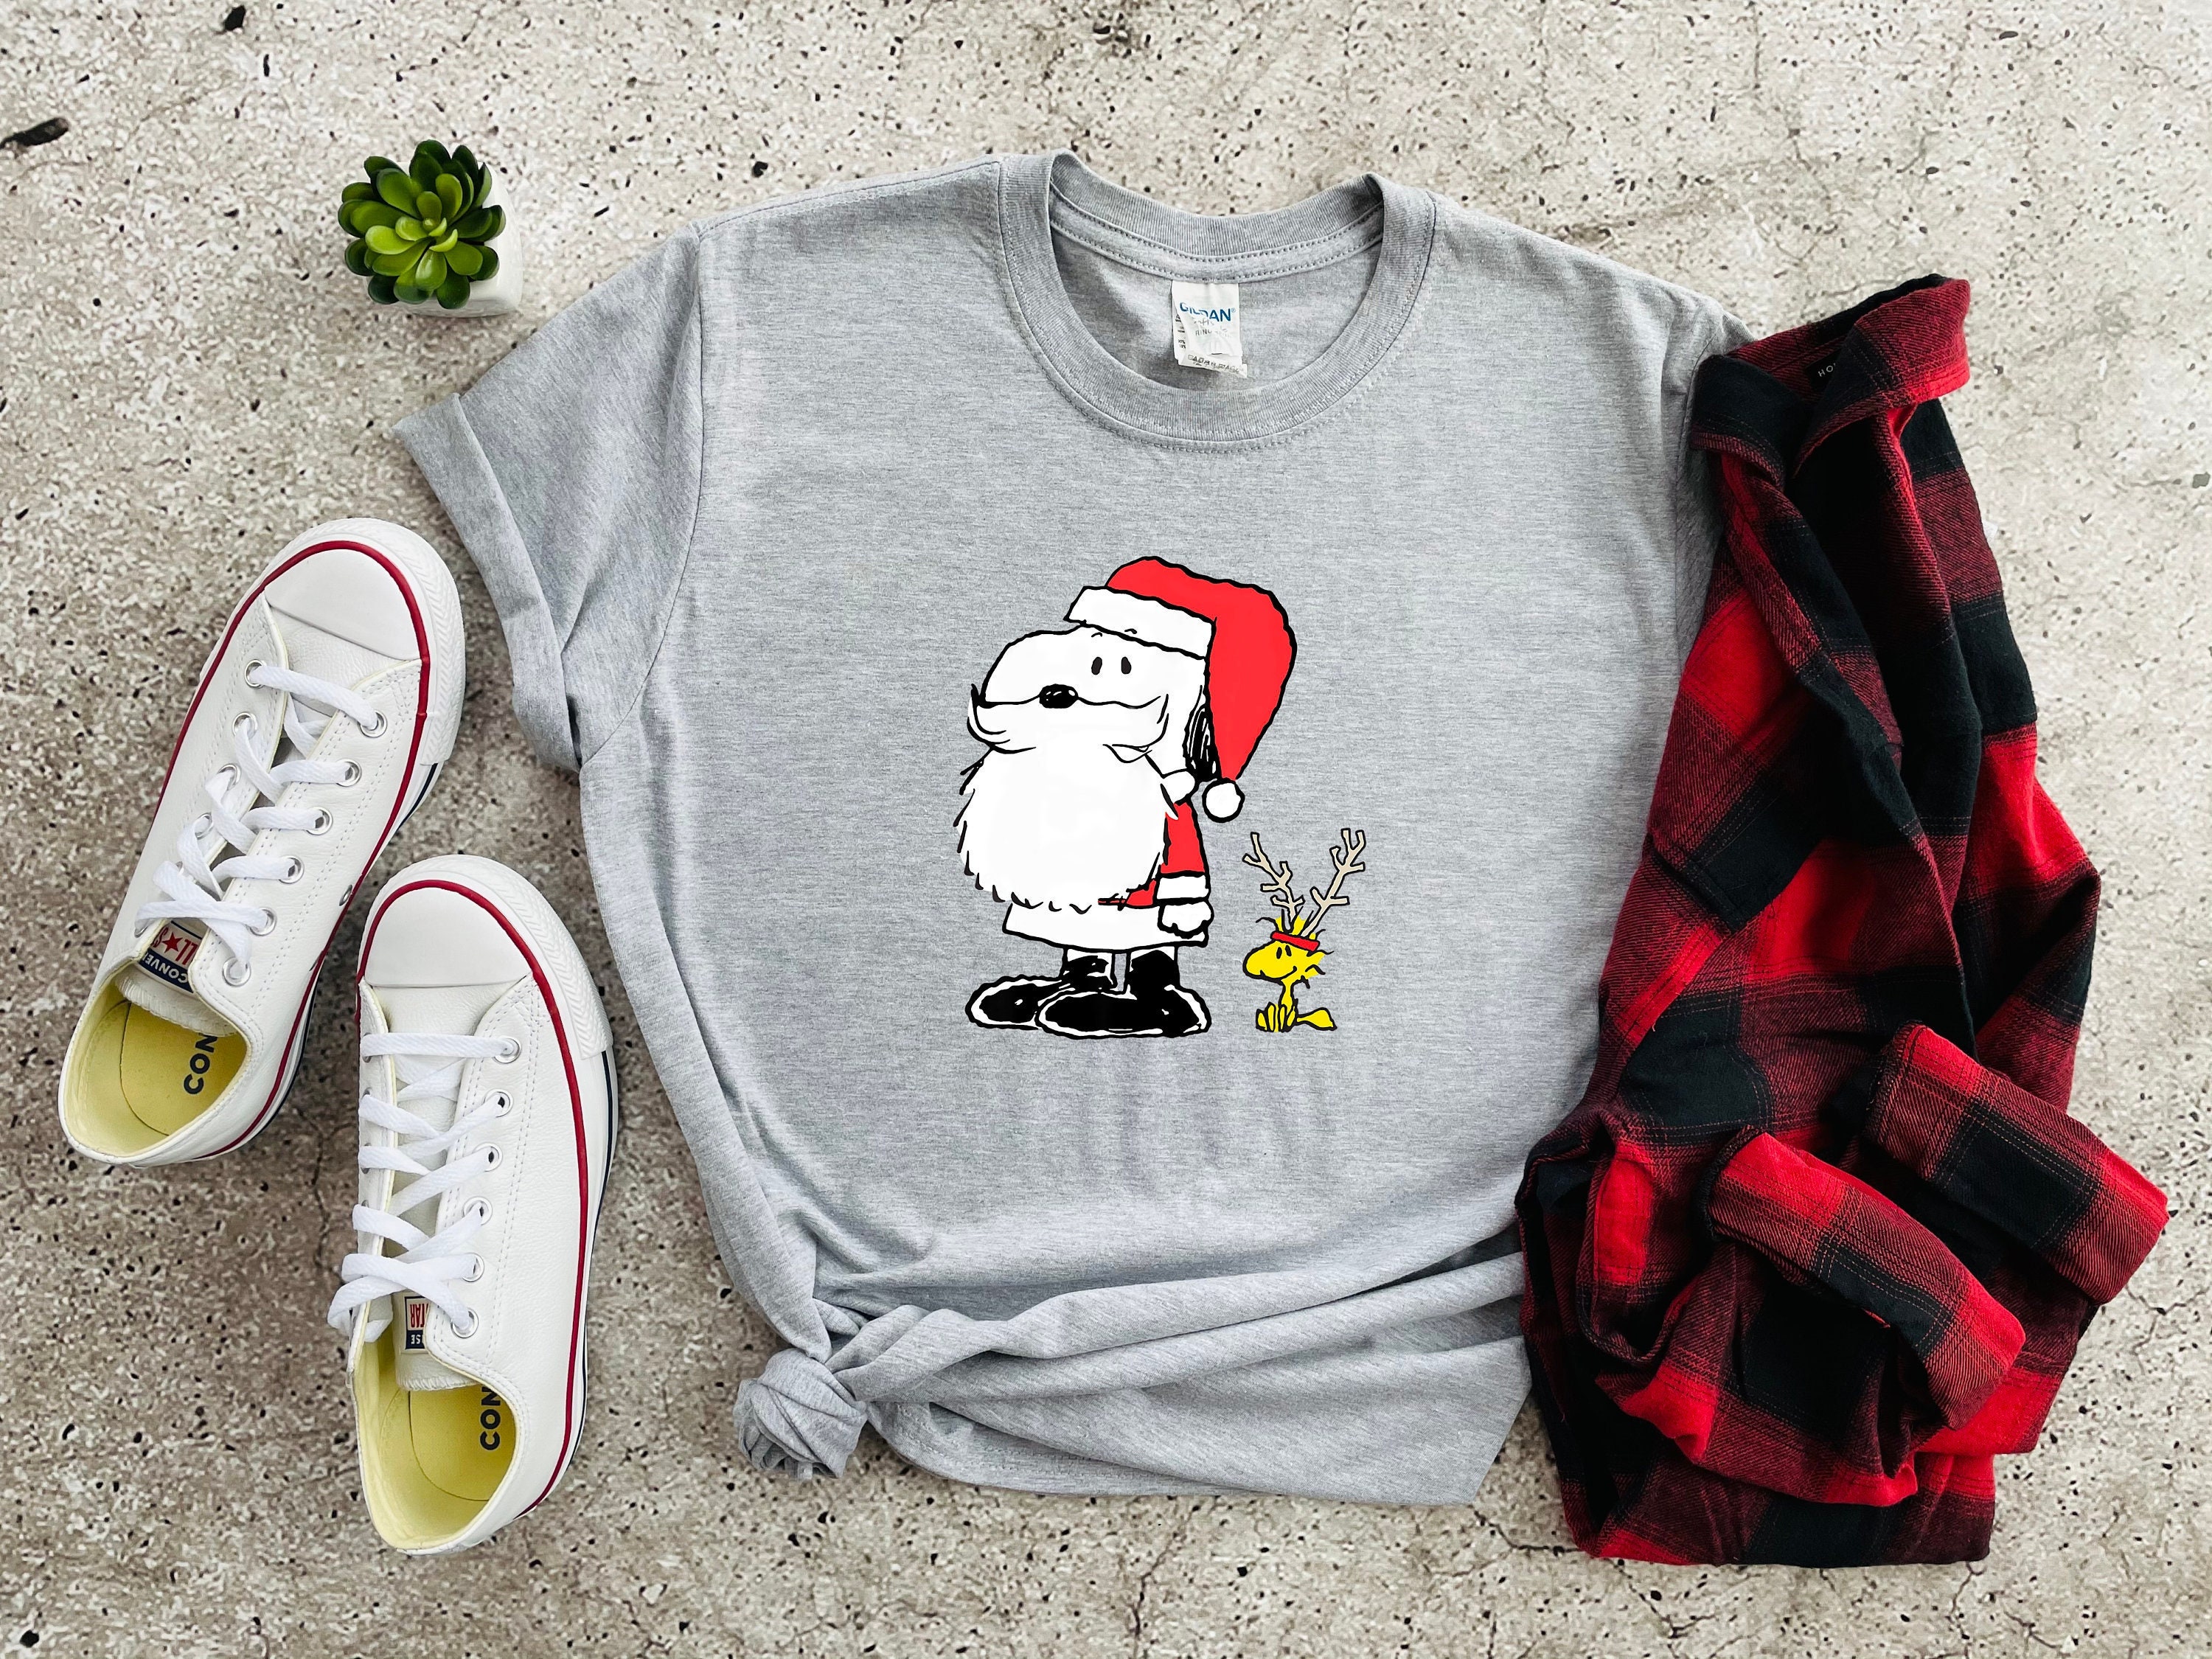 Snoopy Christmas Light House Shirts